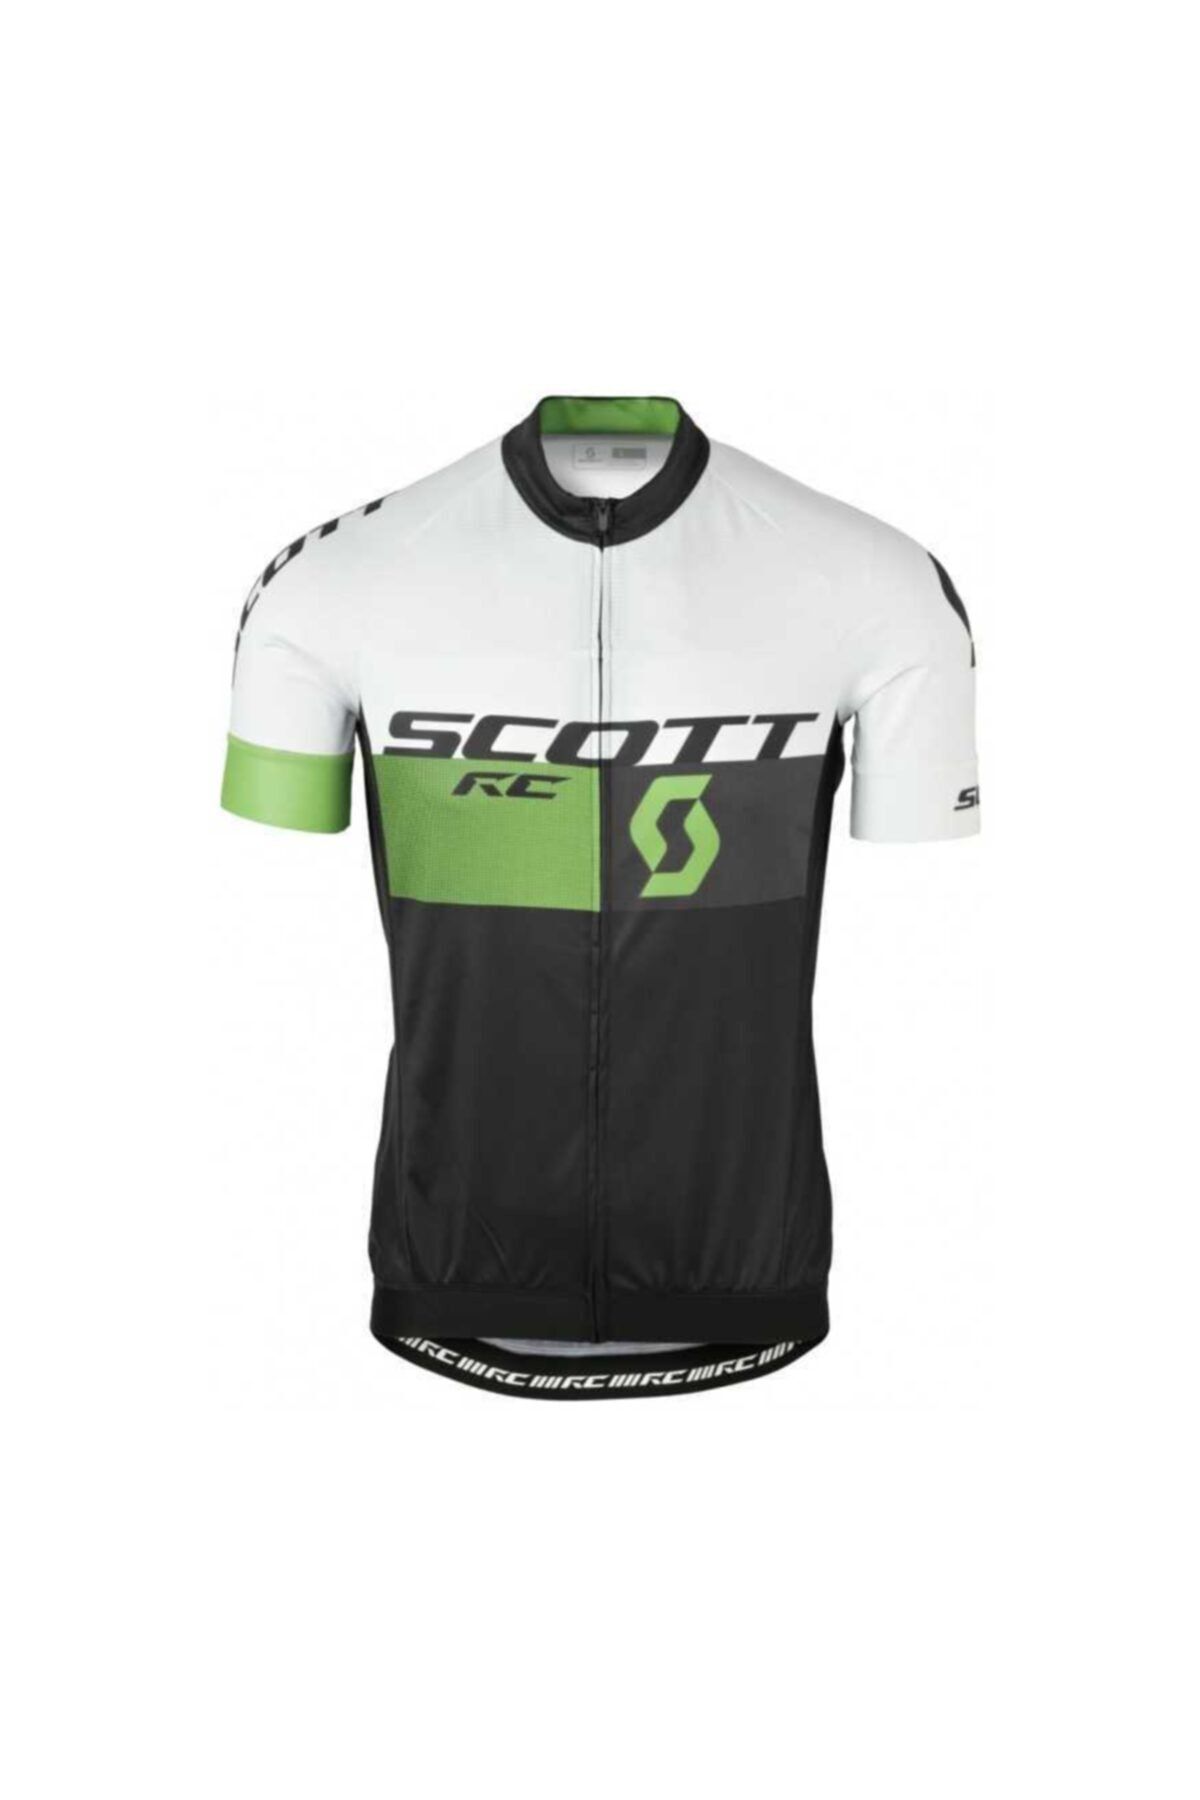 SCOTT Rc Pro Kısa Kol Forma Siyah-beyaz-yeşil S